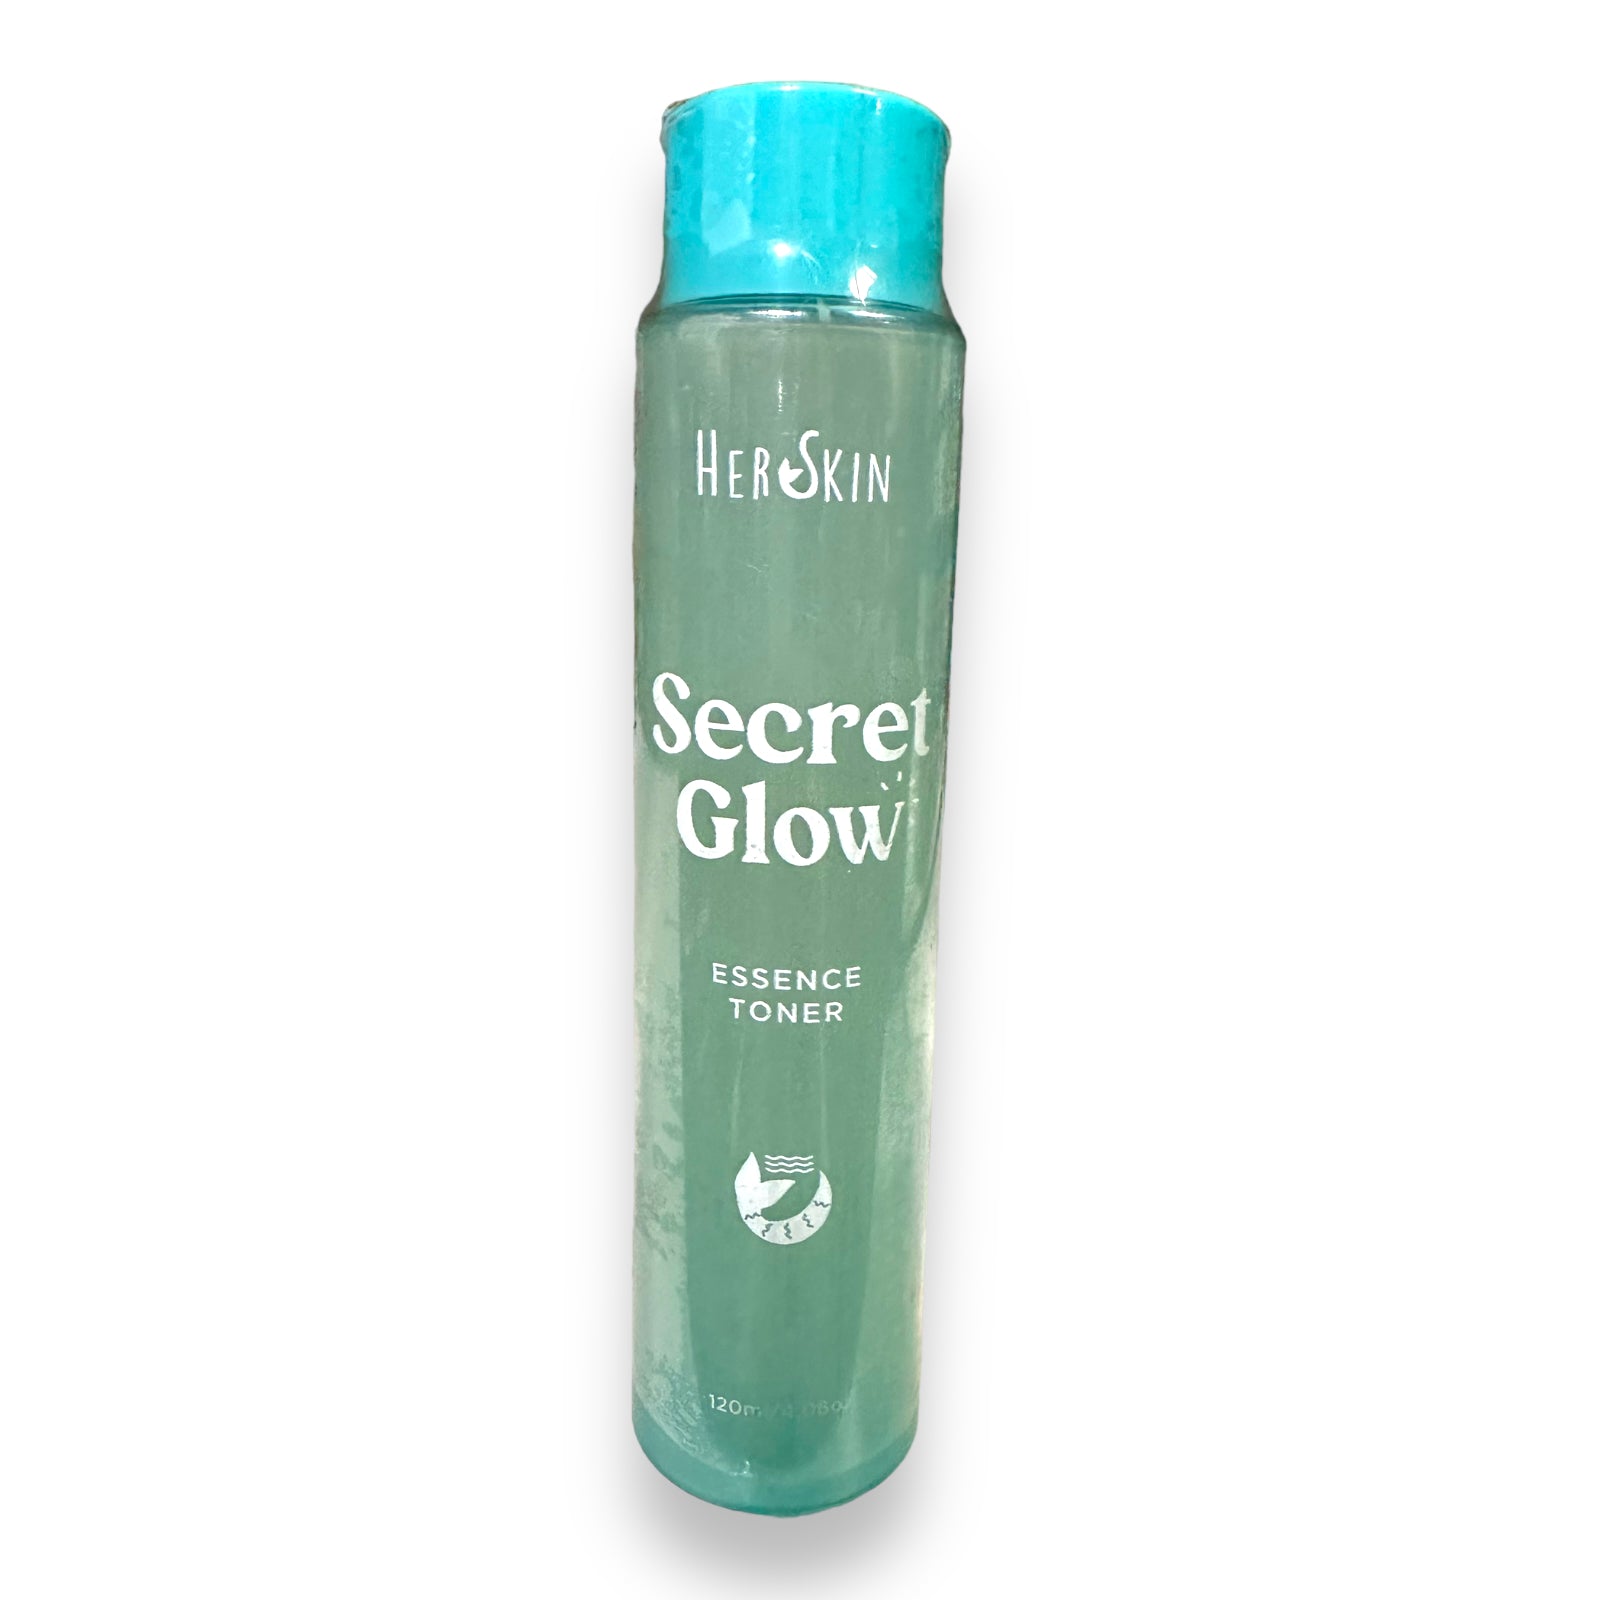 Her Skin - Secret Glow Essence Toner 120 ml